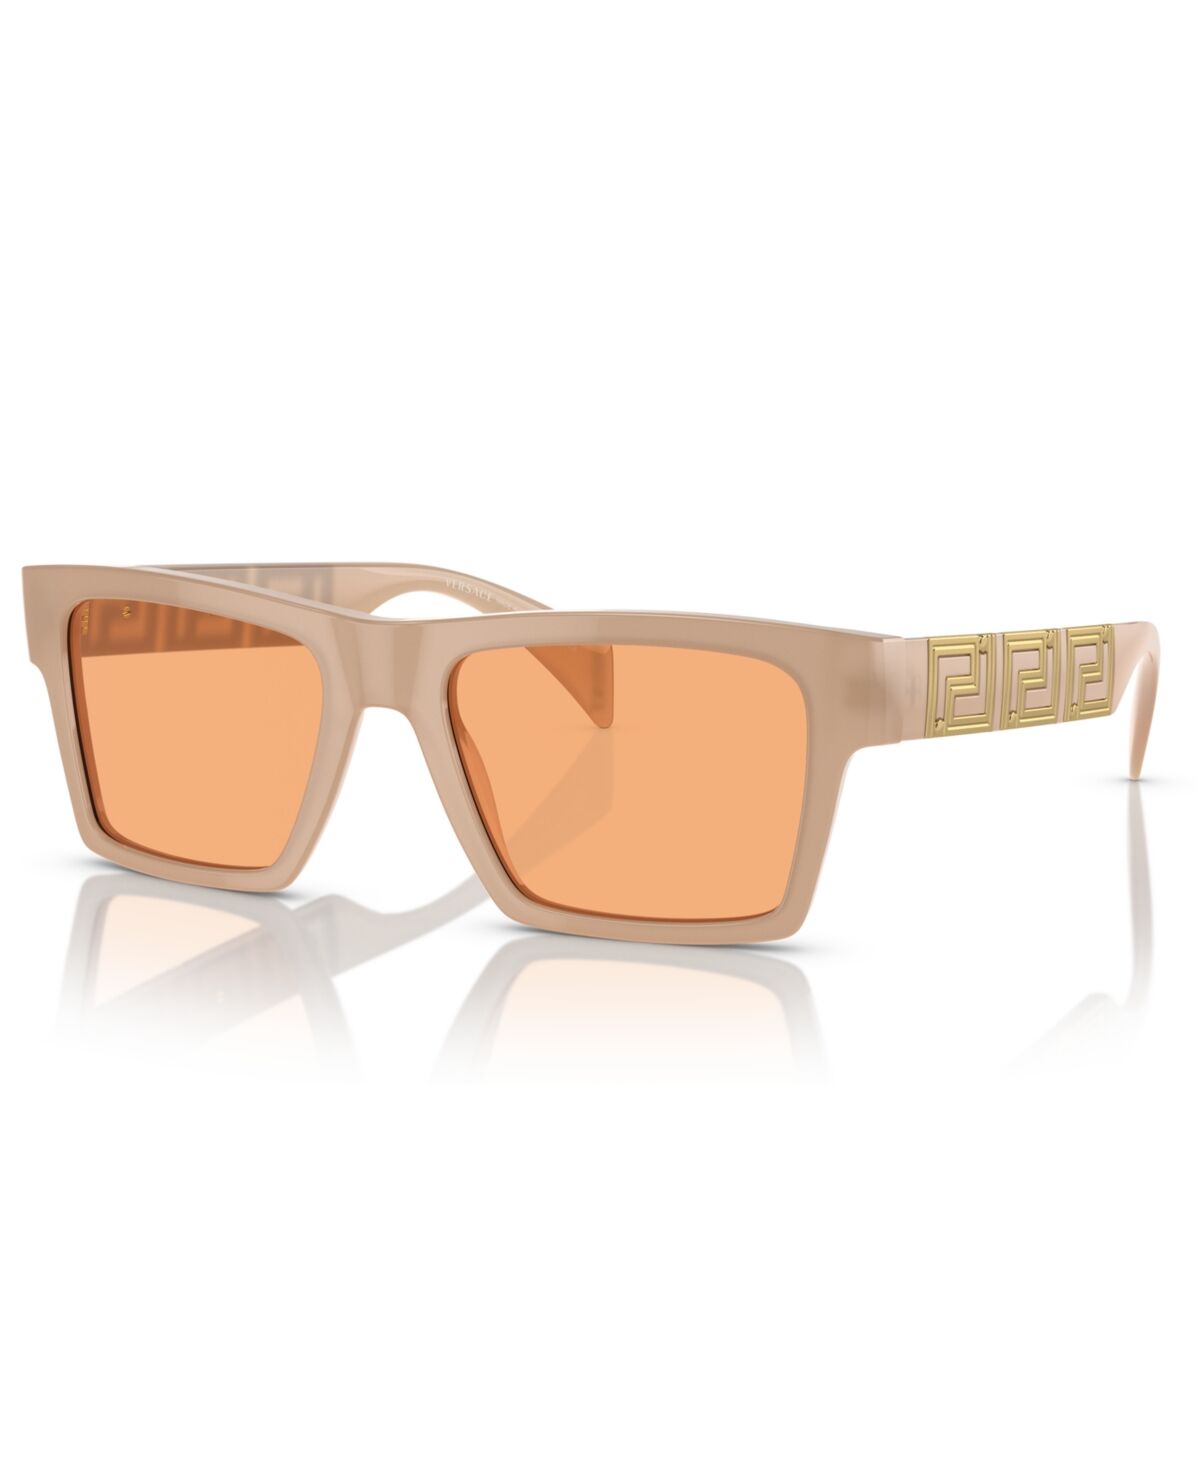 Versace Men's Low Bridge Fit Sunglasses, VE4445F - Opal Beige